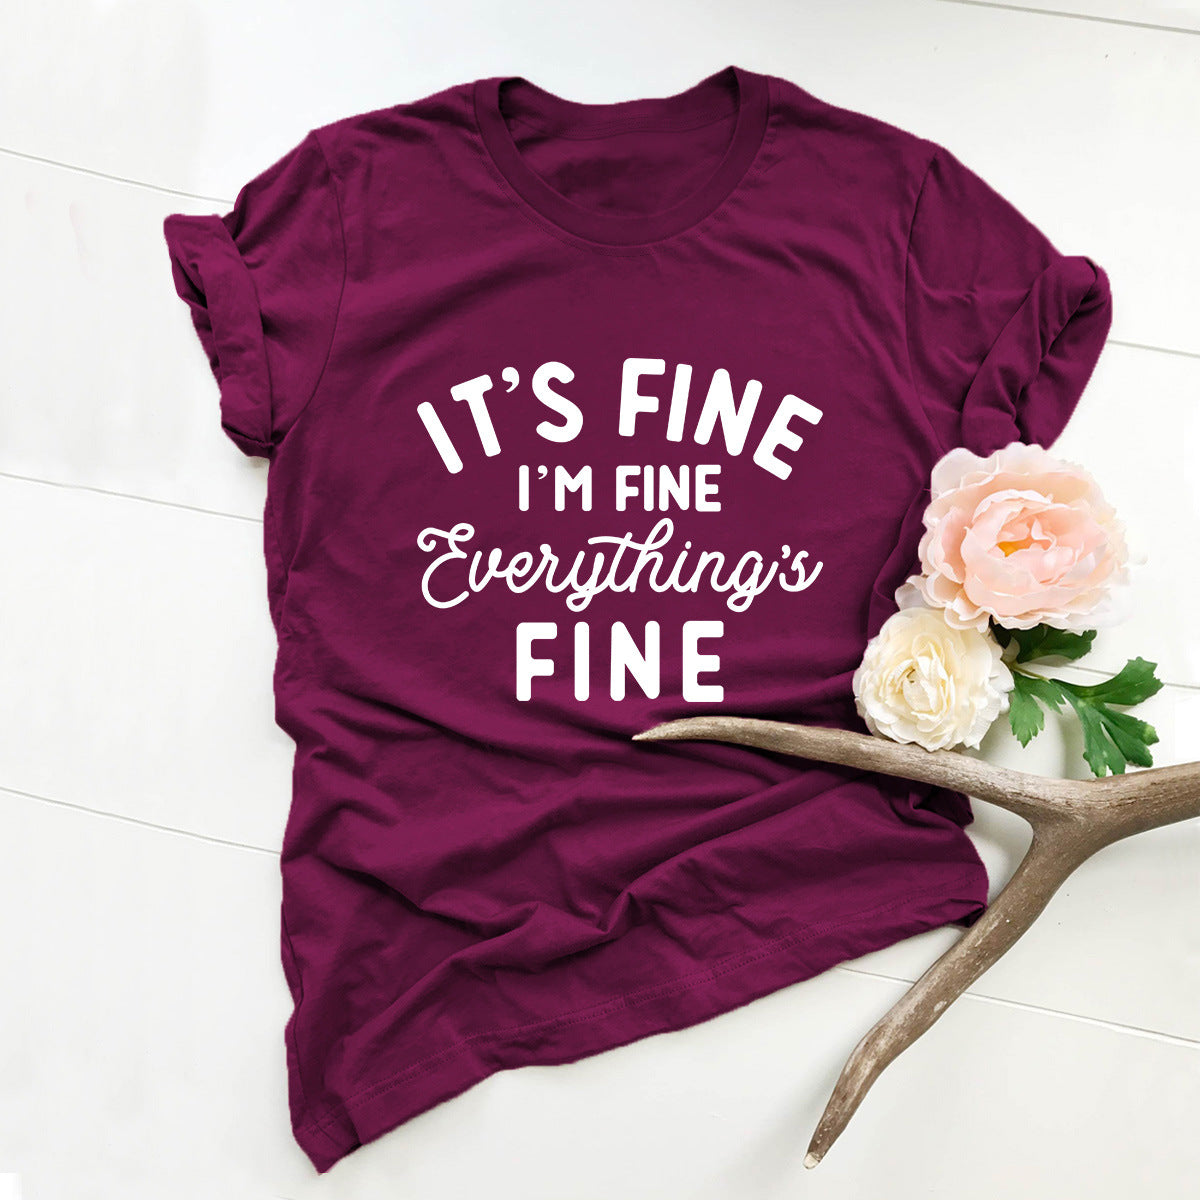 Lady’s Everything’s Fine Phrase Print Tee Shirt